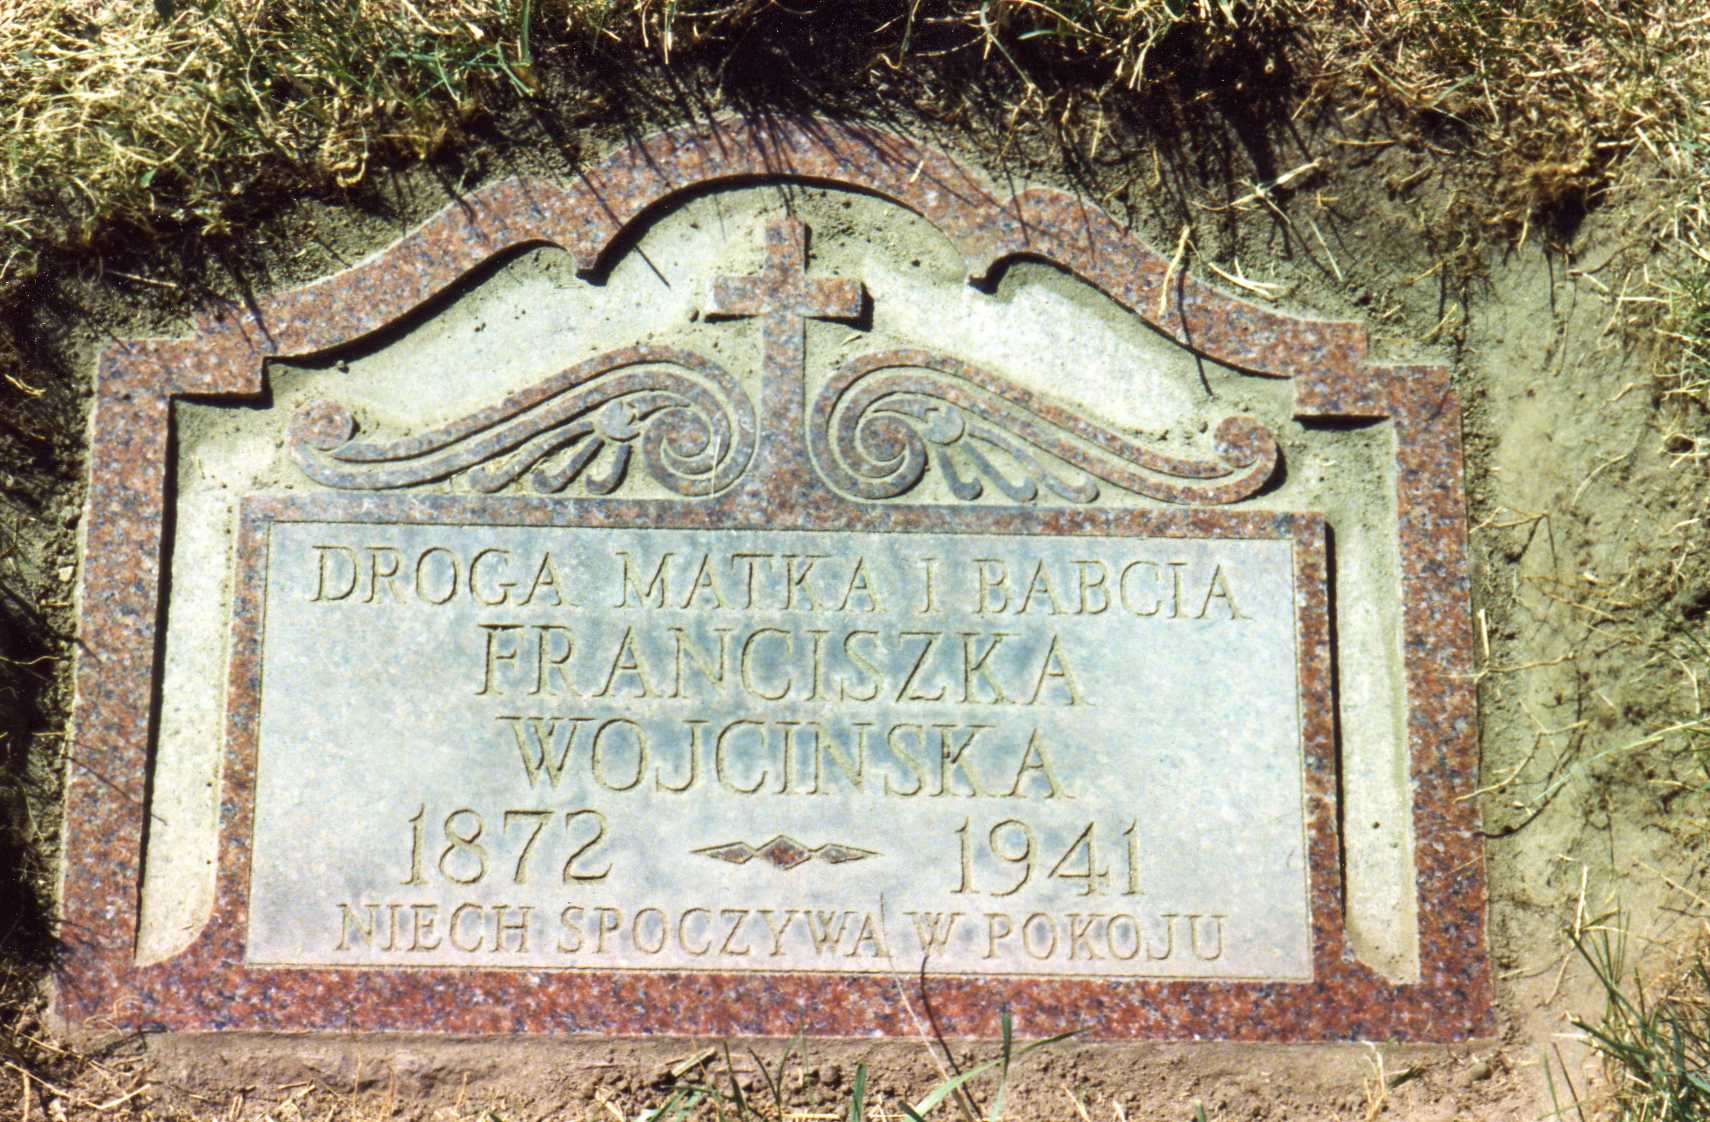 1941 Franciszka Wojcinska grave marker